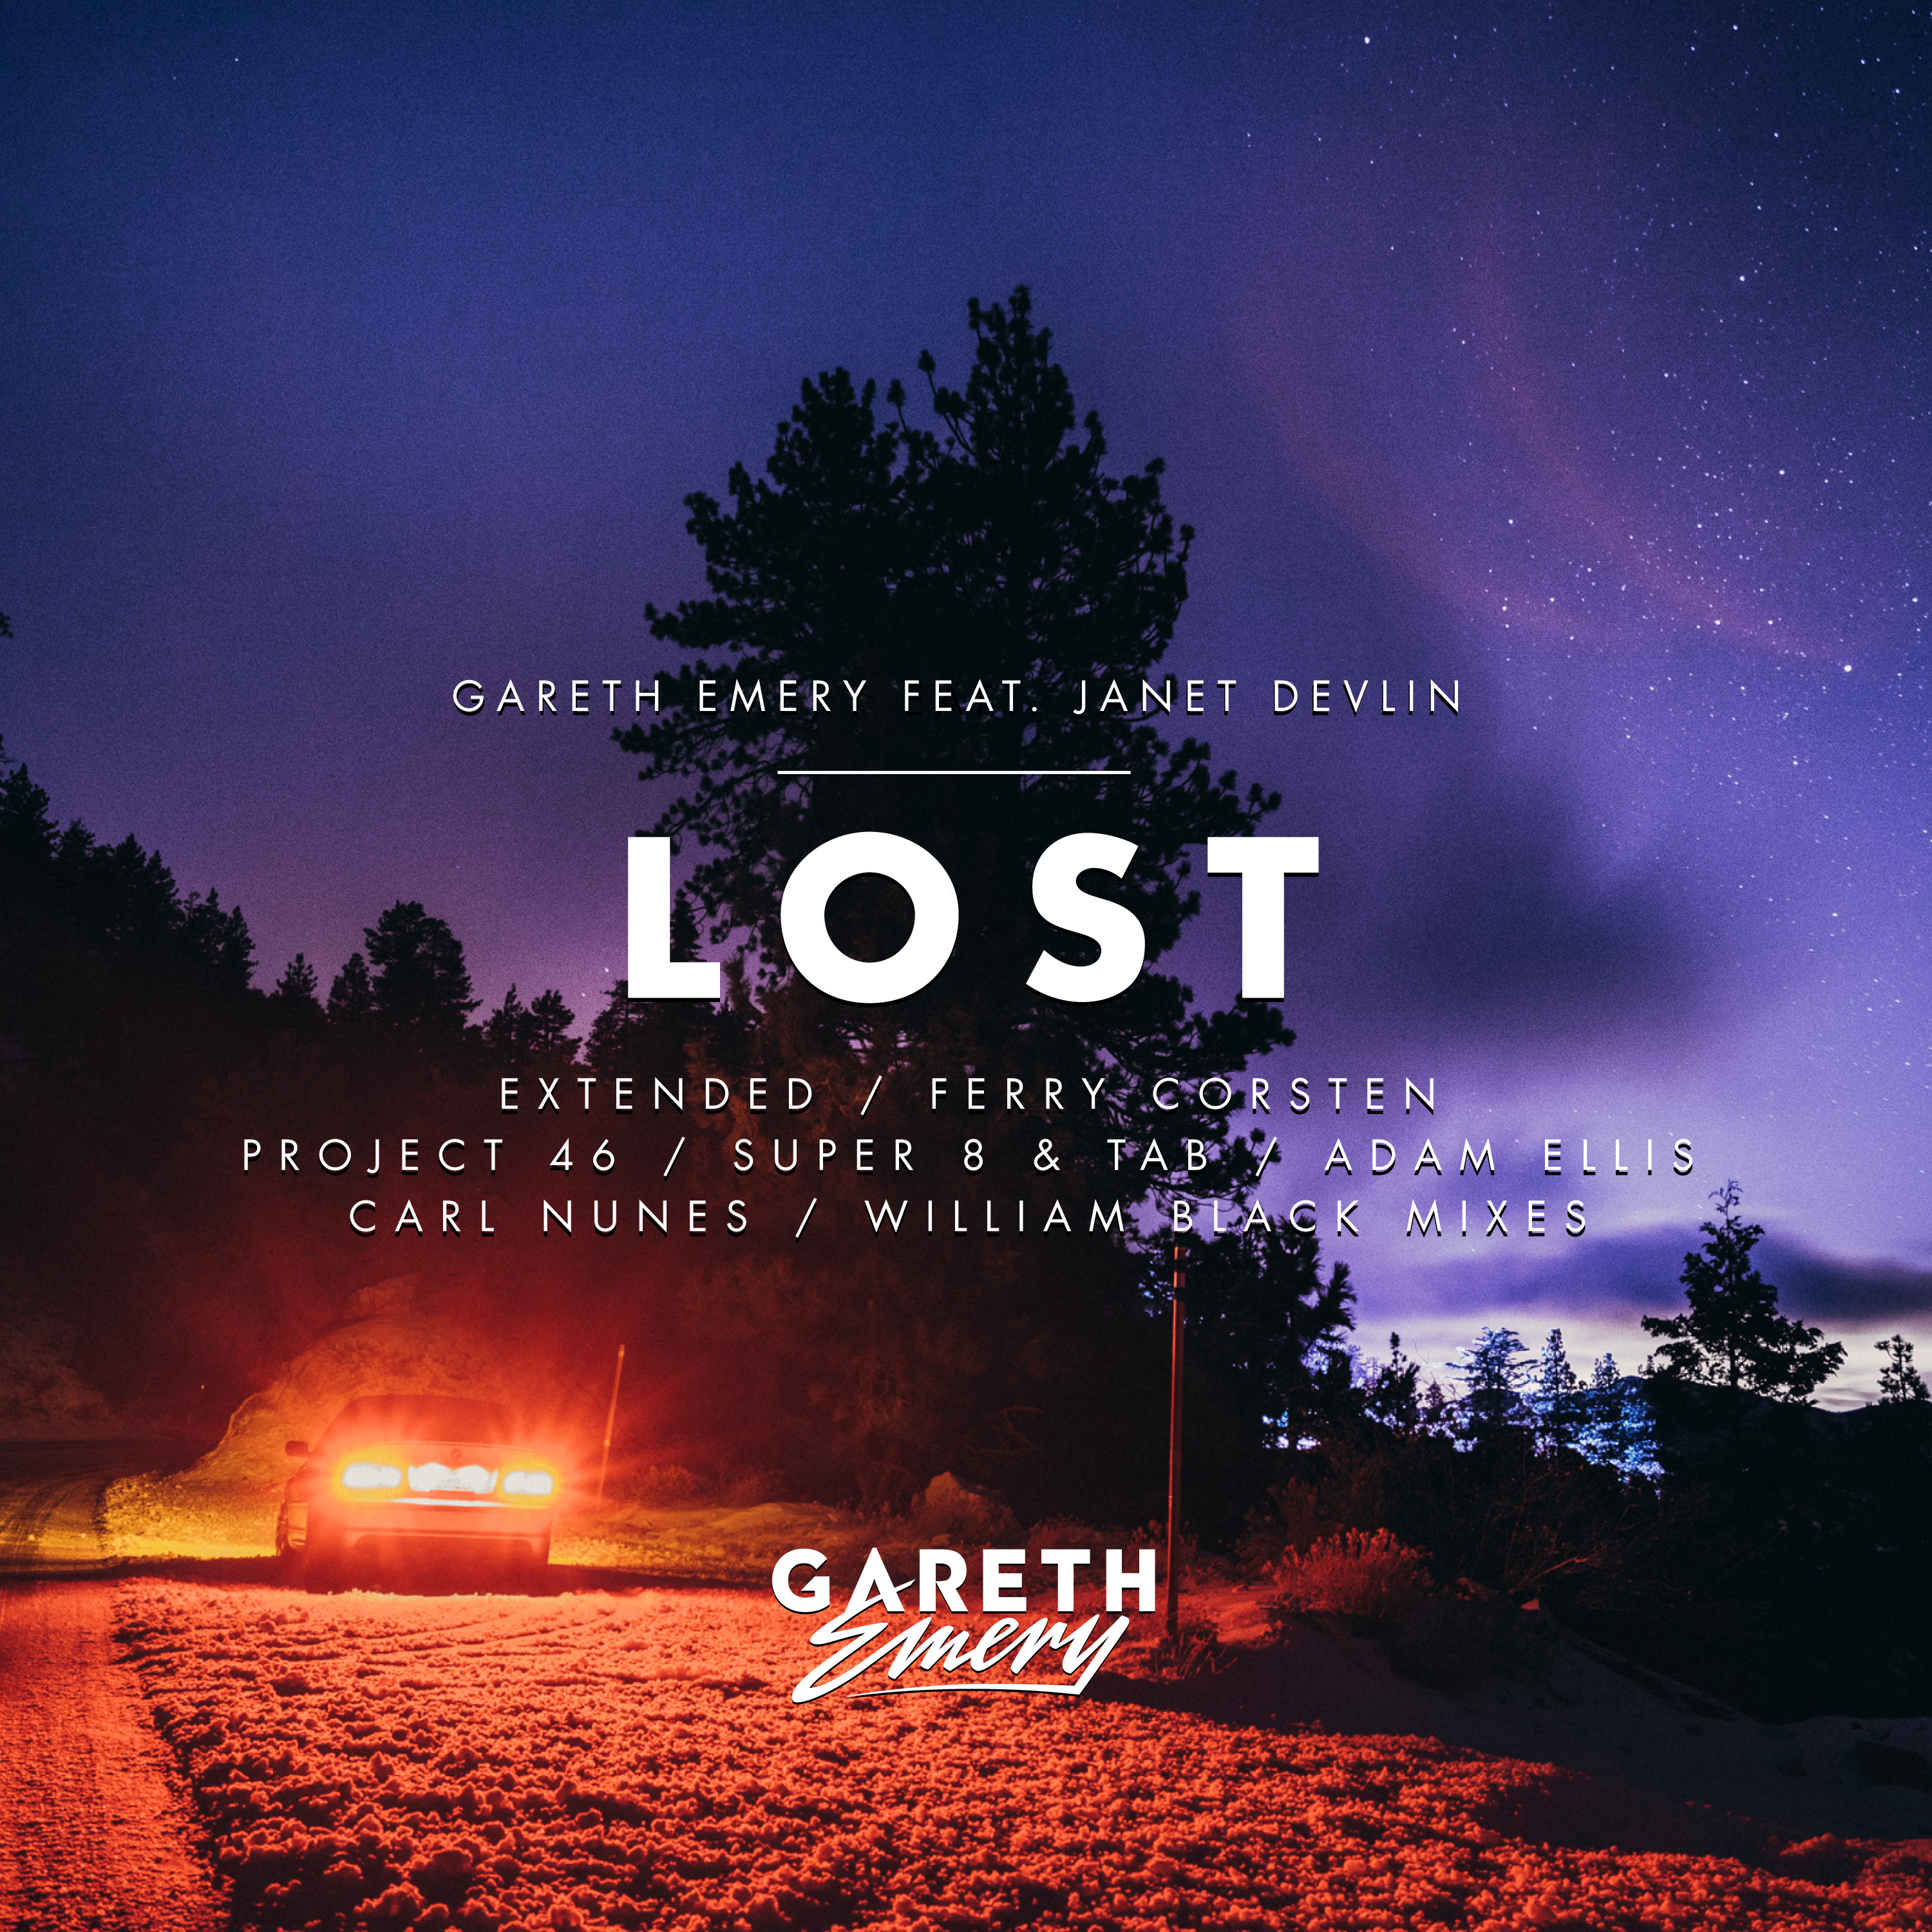 Lost (Carl Nunes Remix)